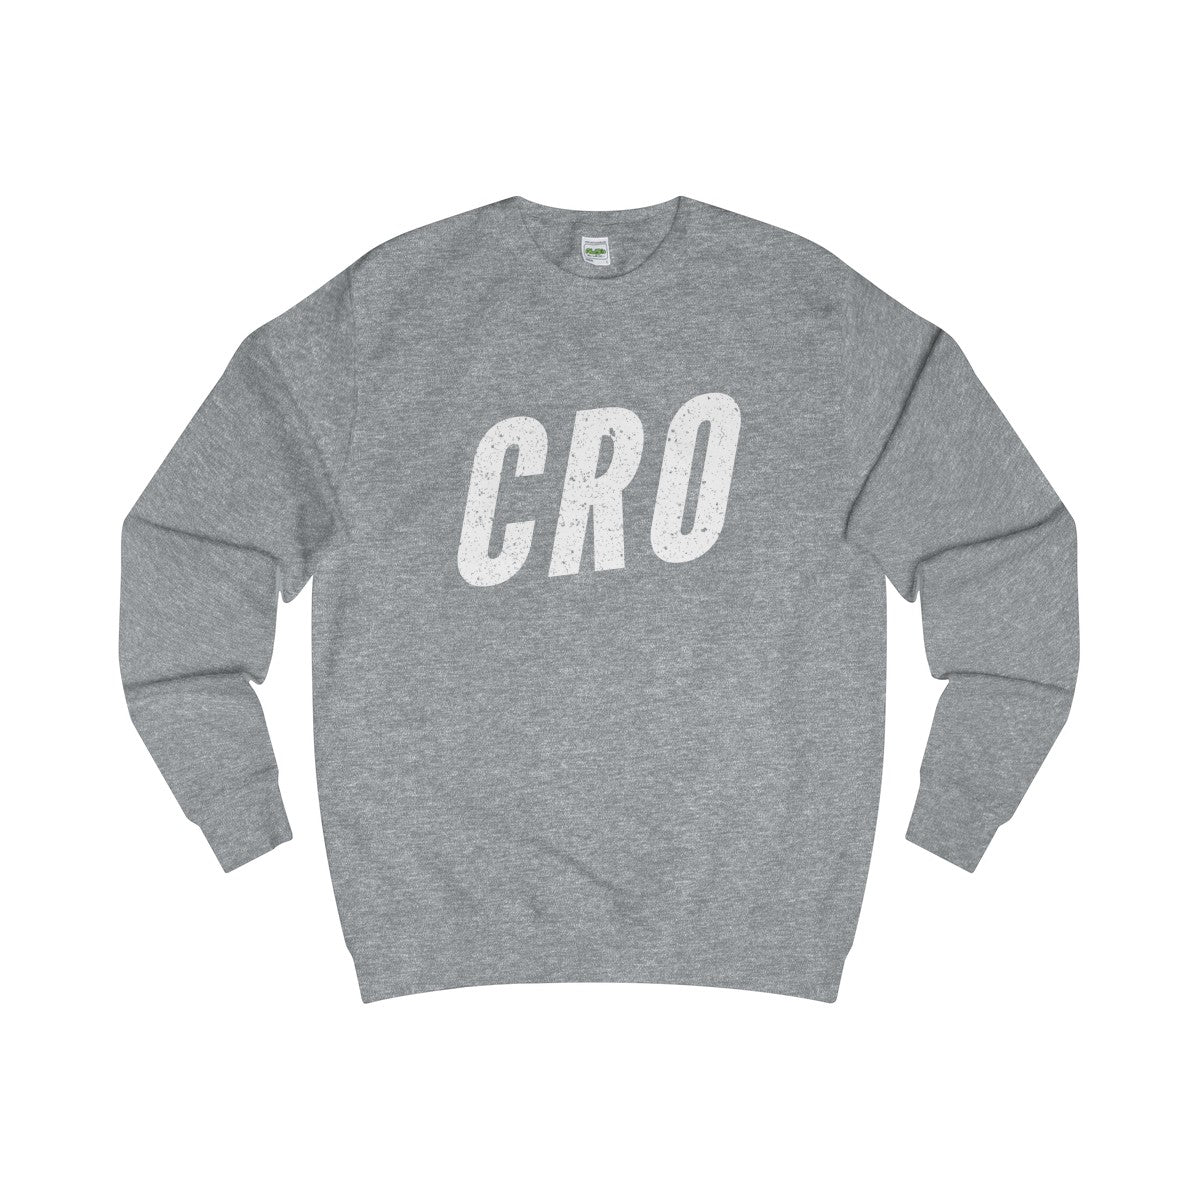 Croydon CR0 Sweater